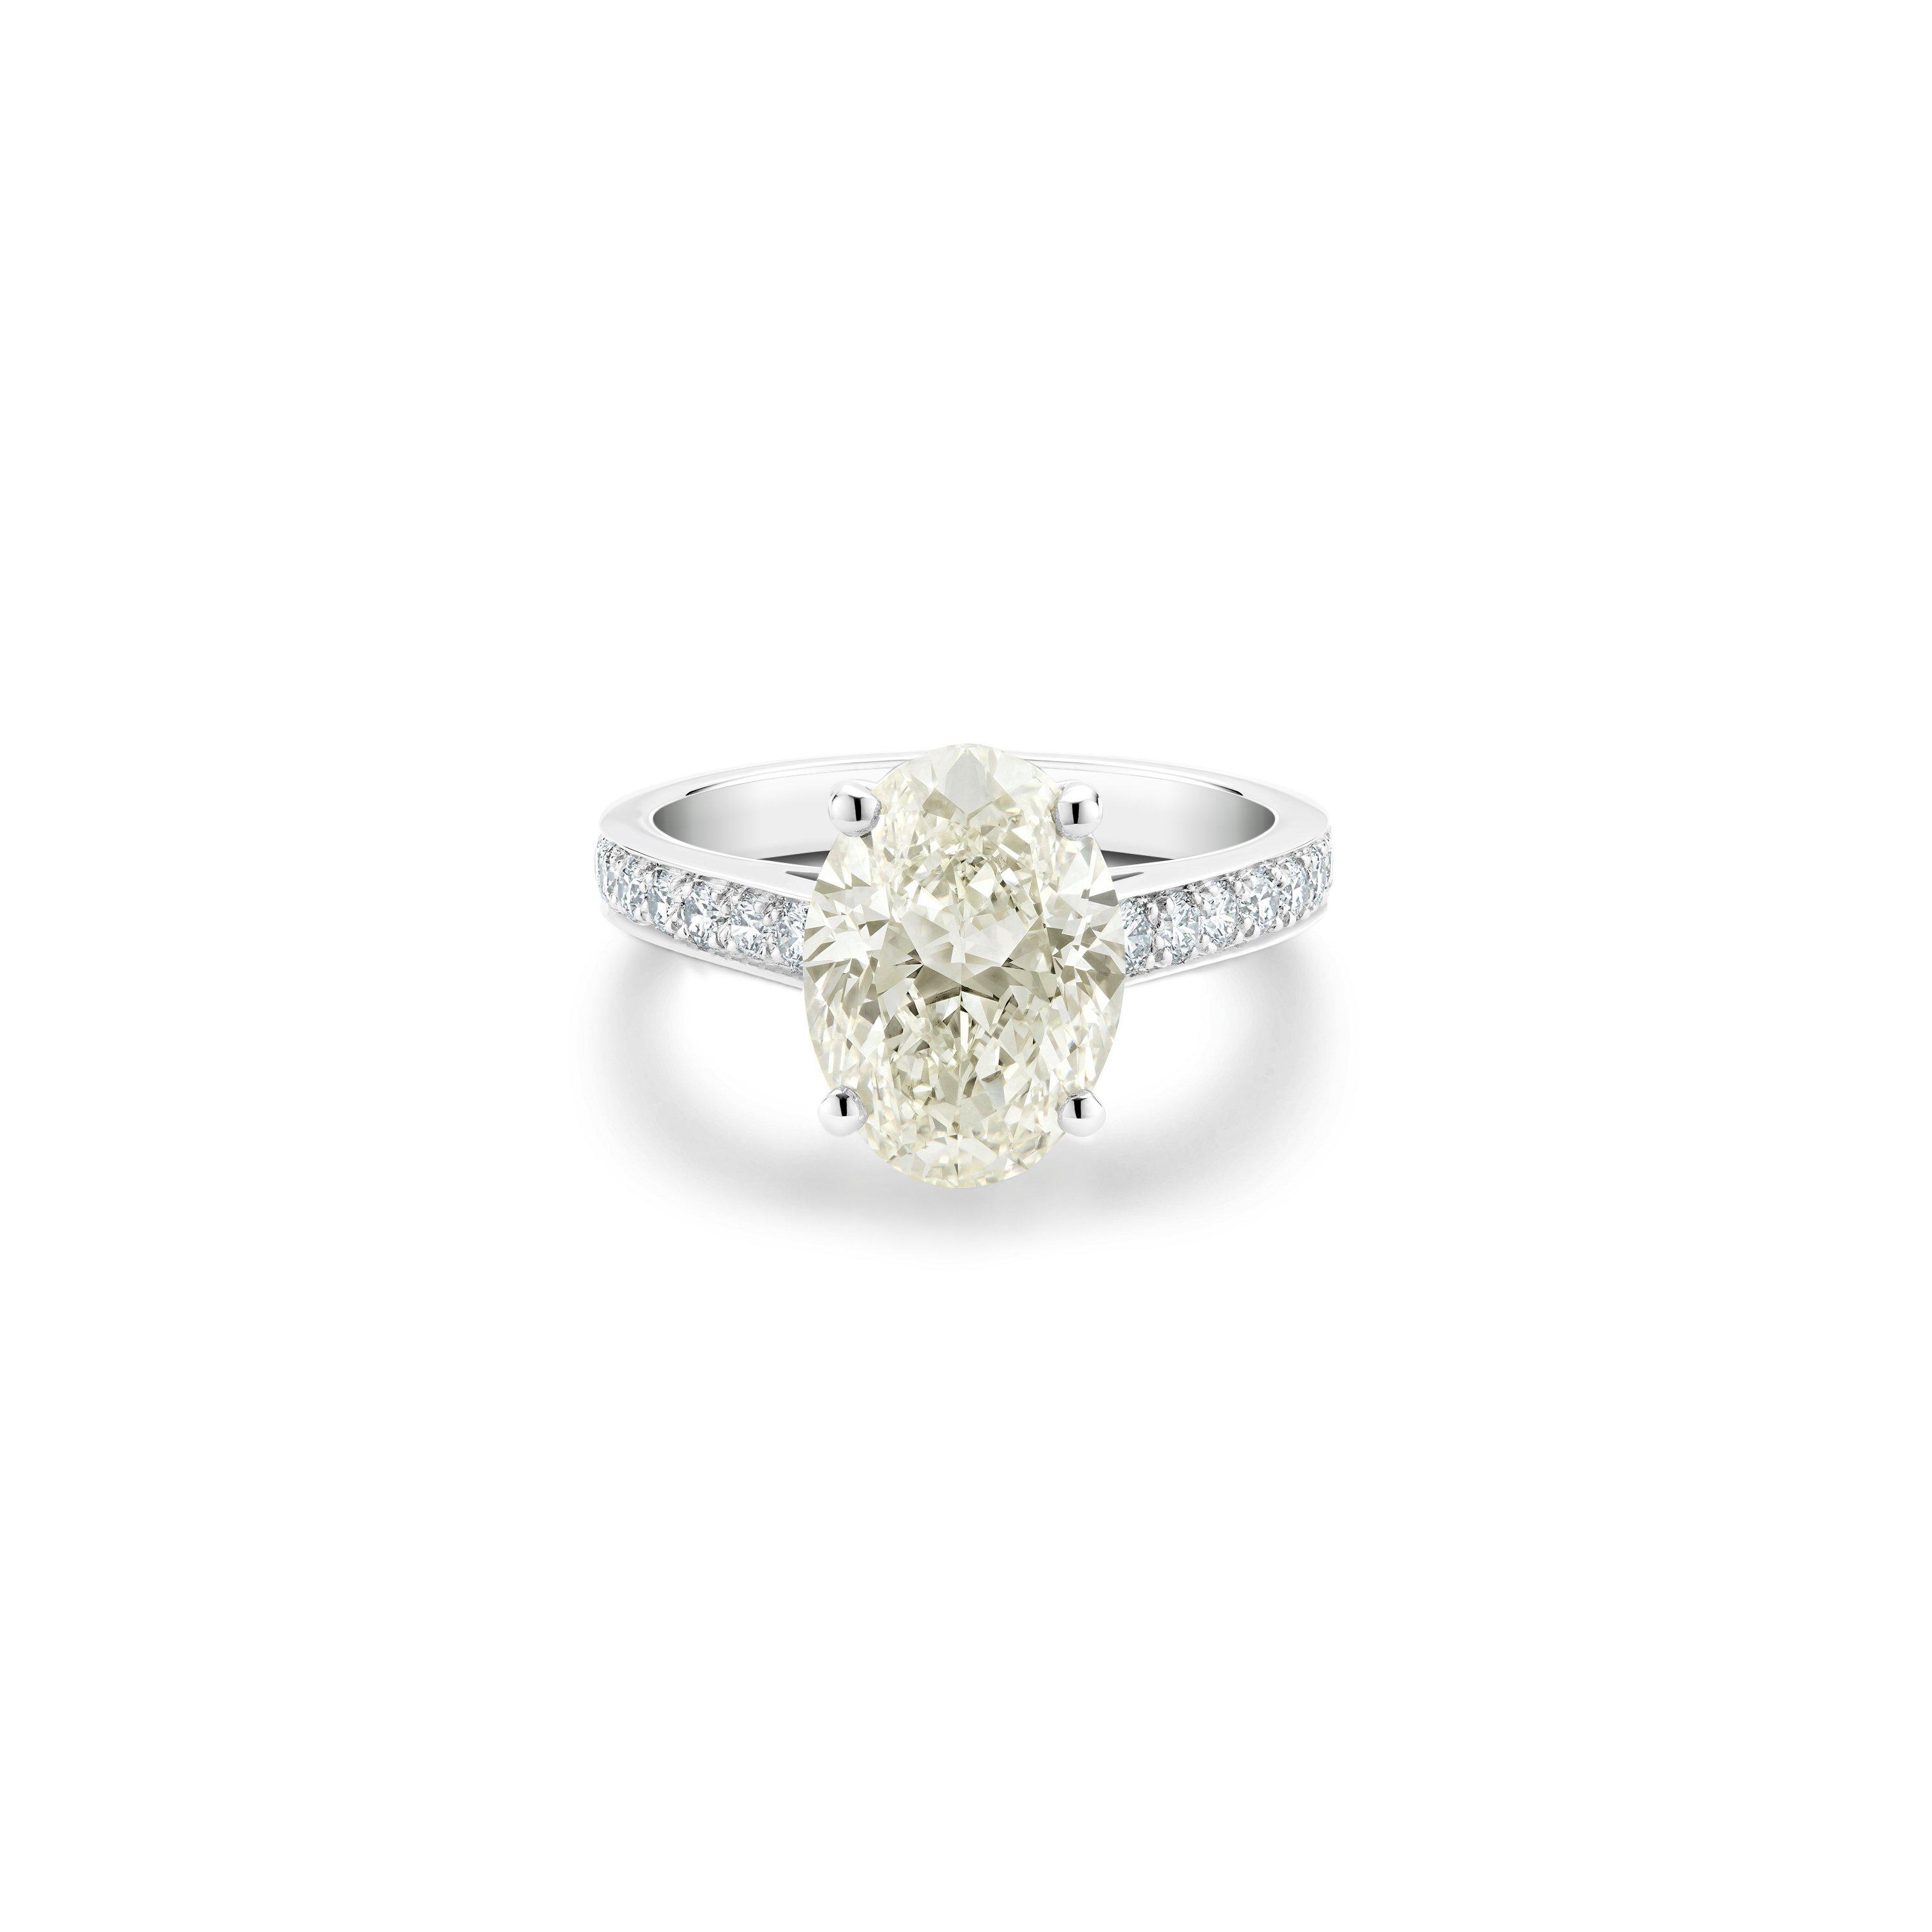 Old Bond Street oval-shaped diamond ring